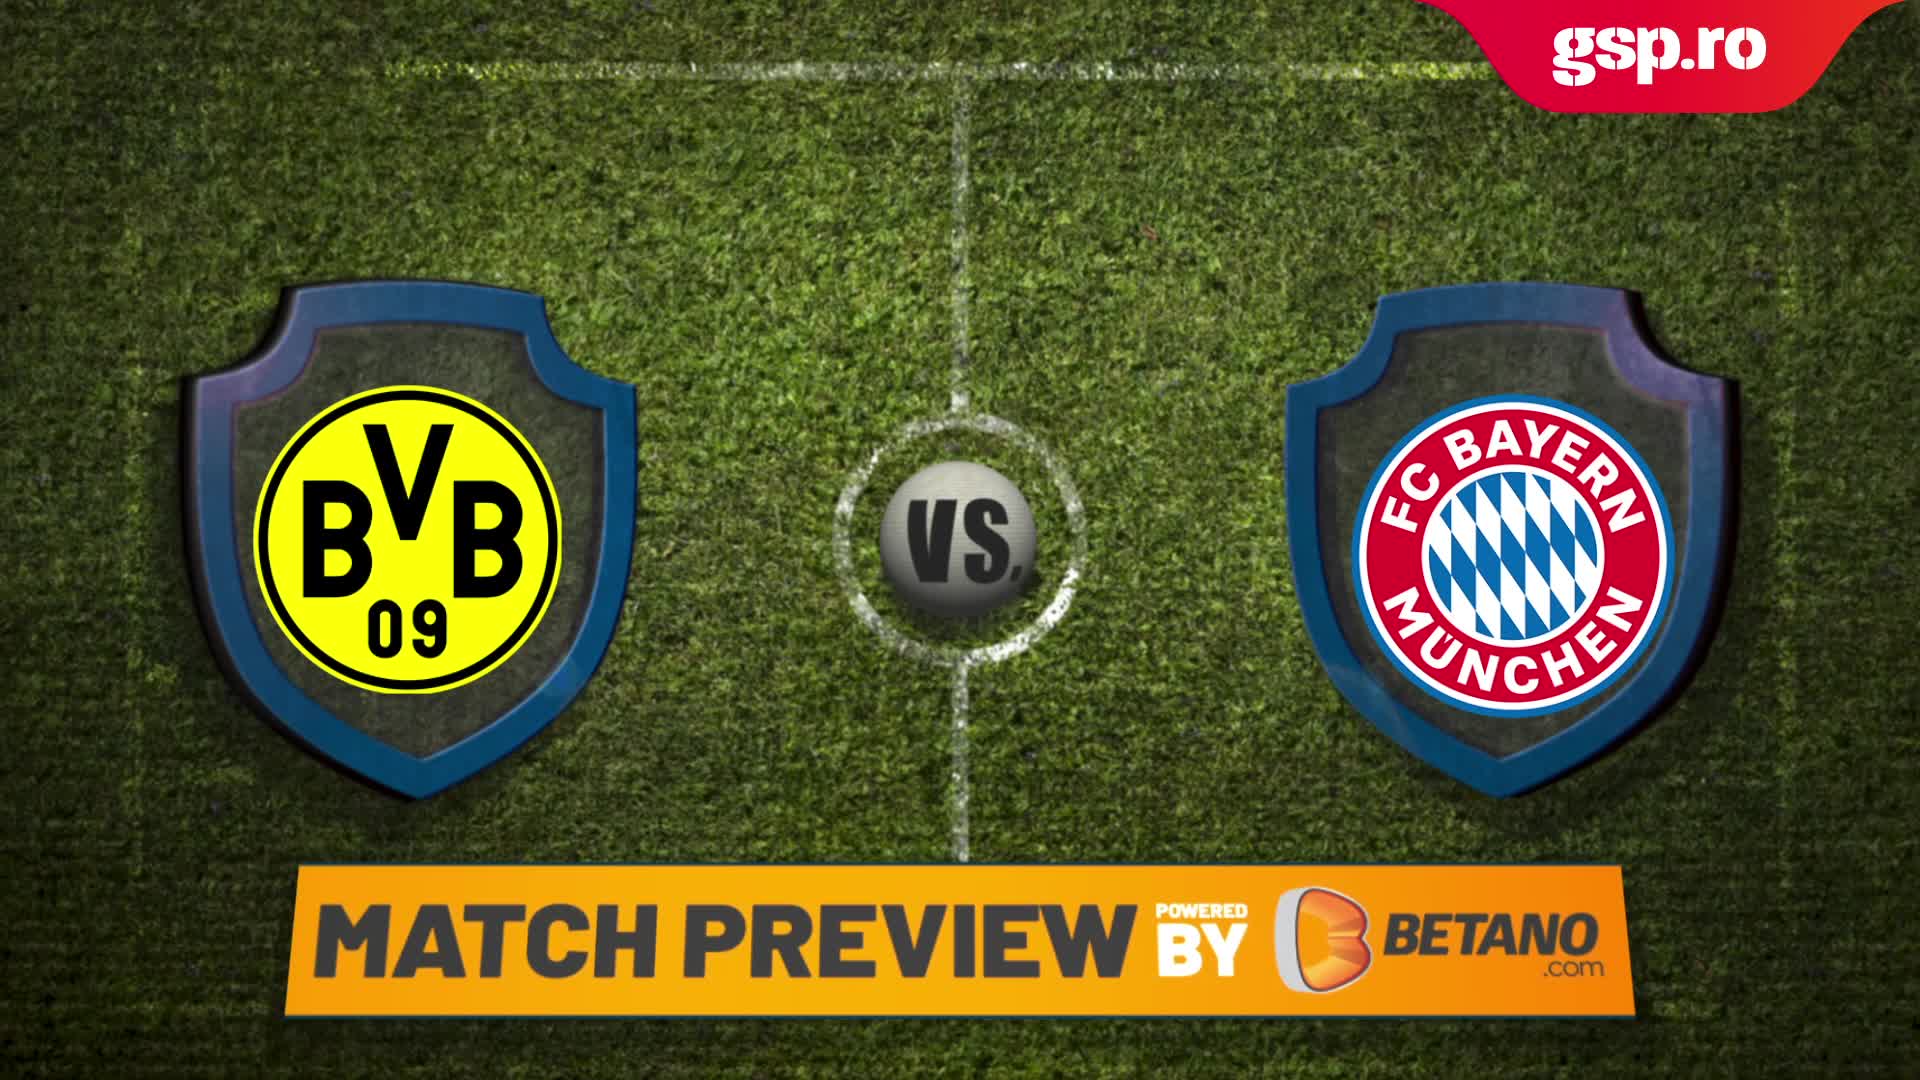  Duel puternic în Bundesliga, Dortmund primește vizita celor de la Bayern